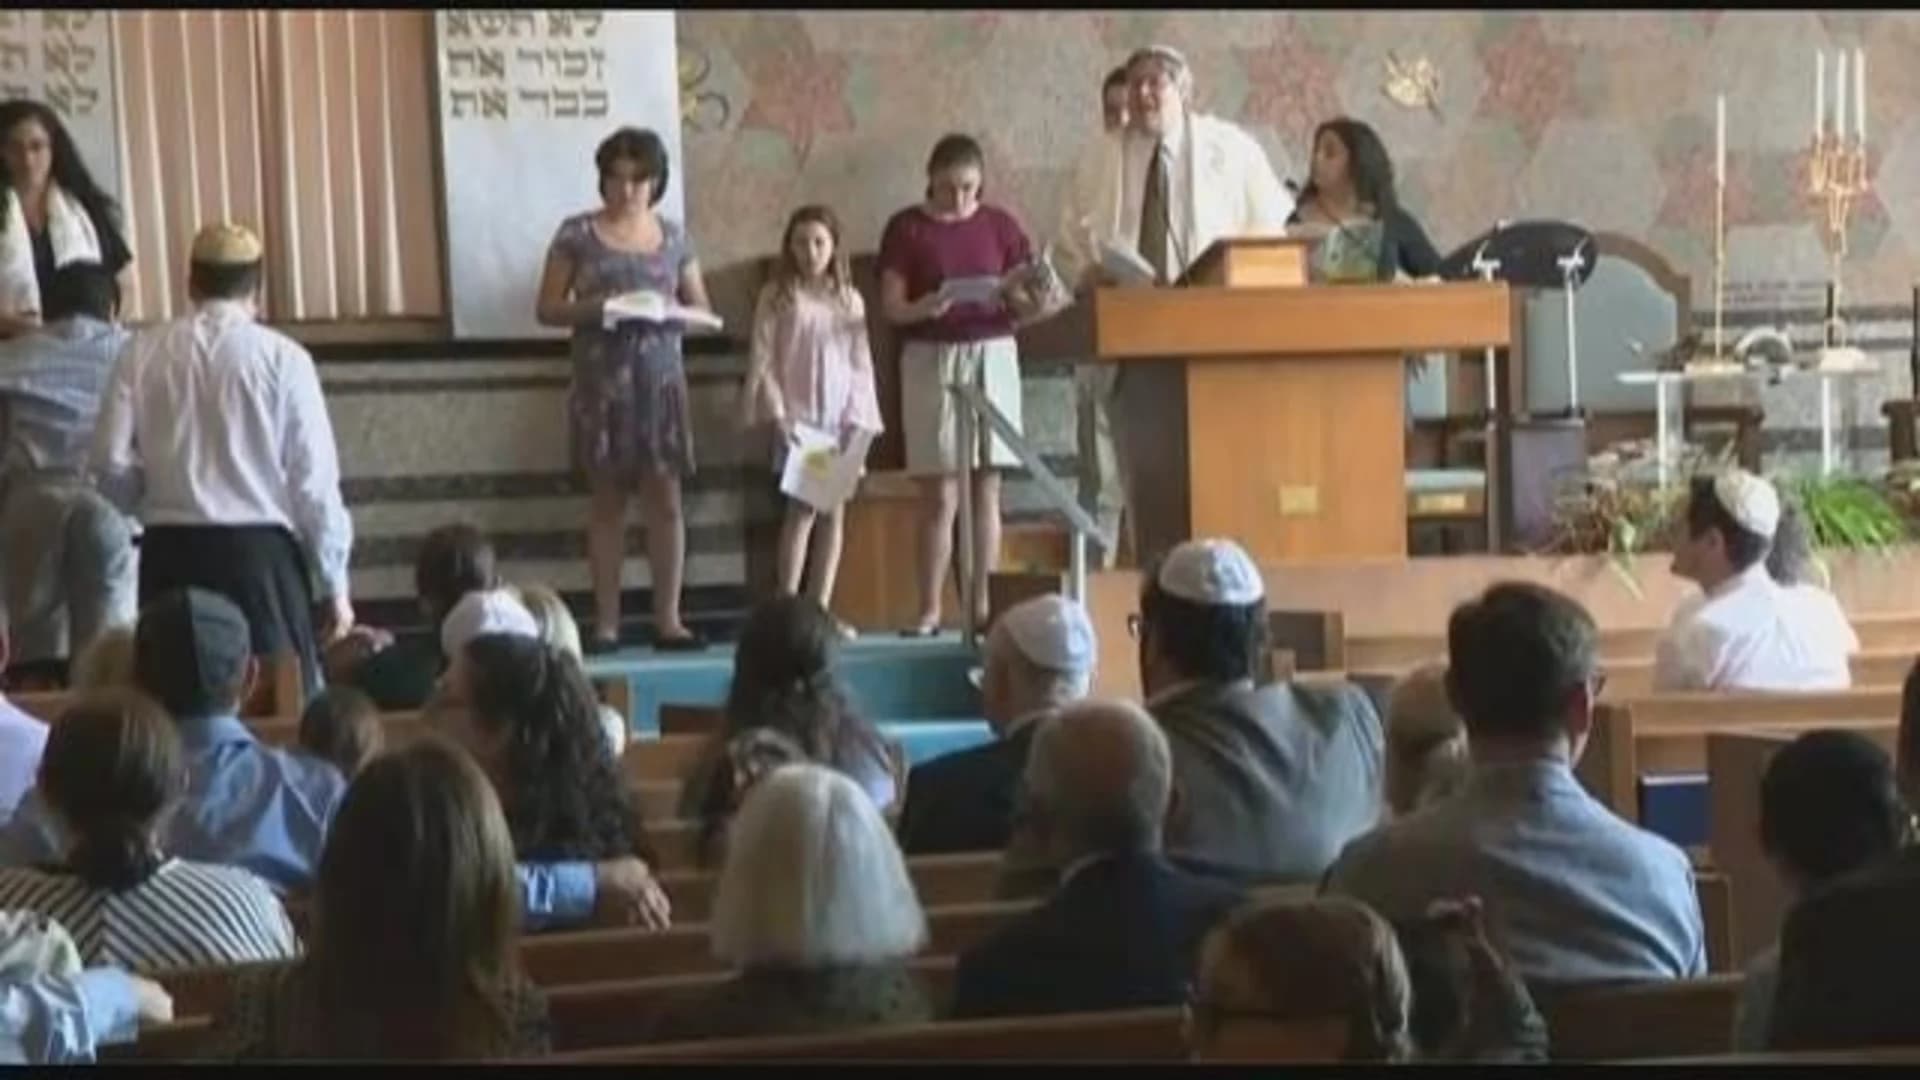 Jewish community gathers for Yom Kippur